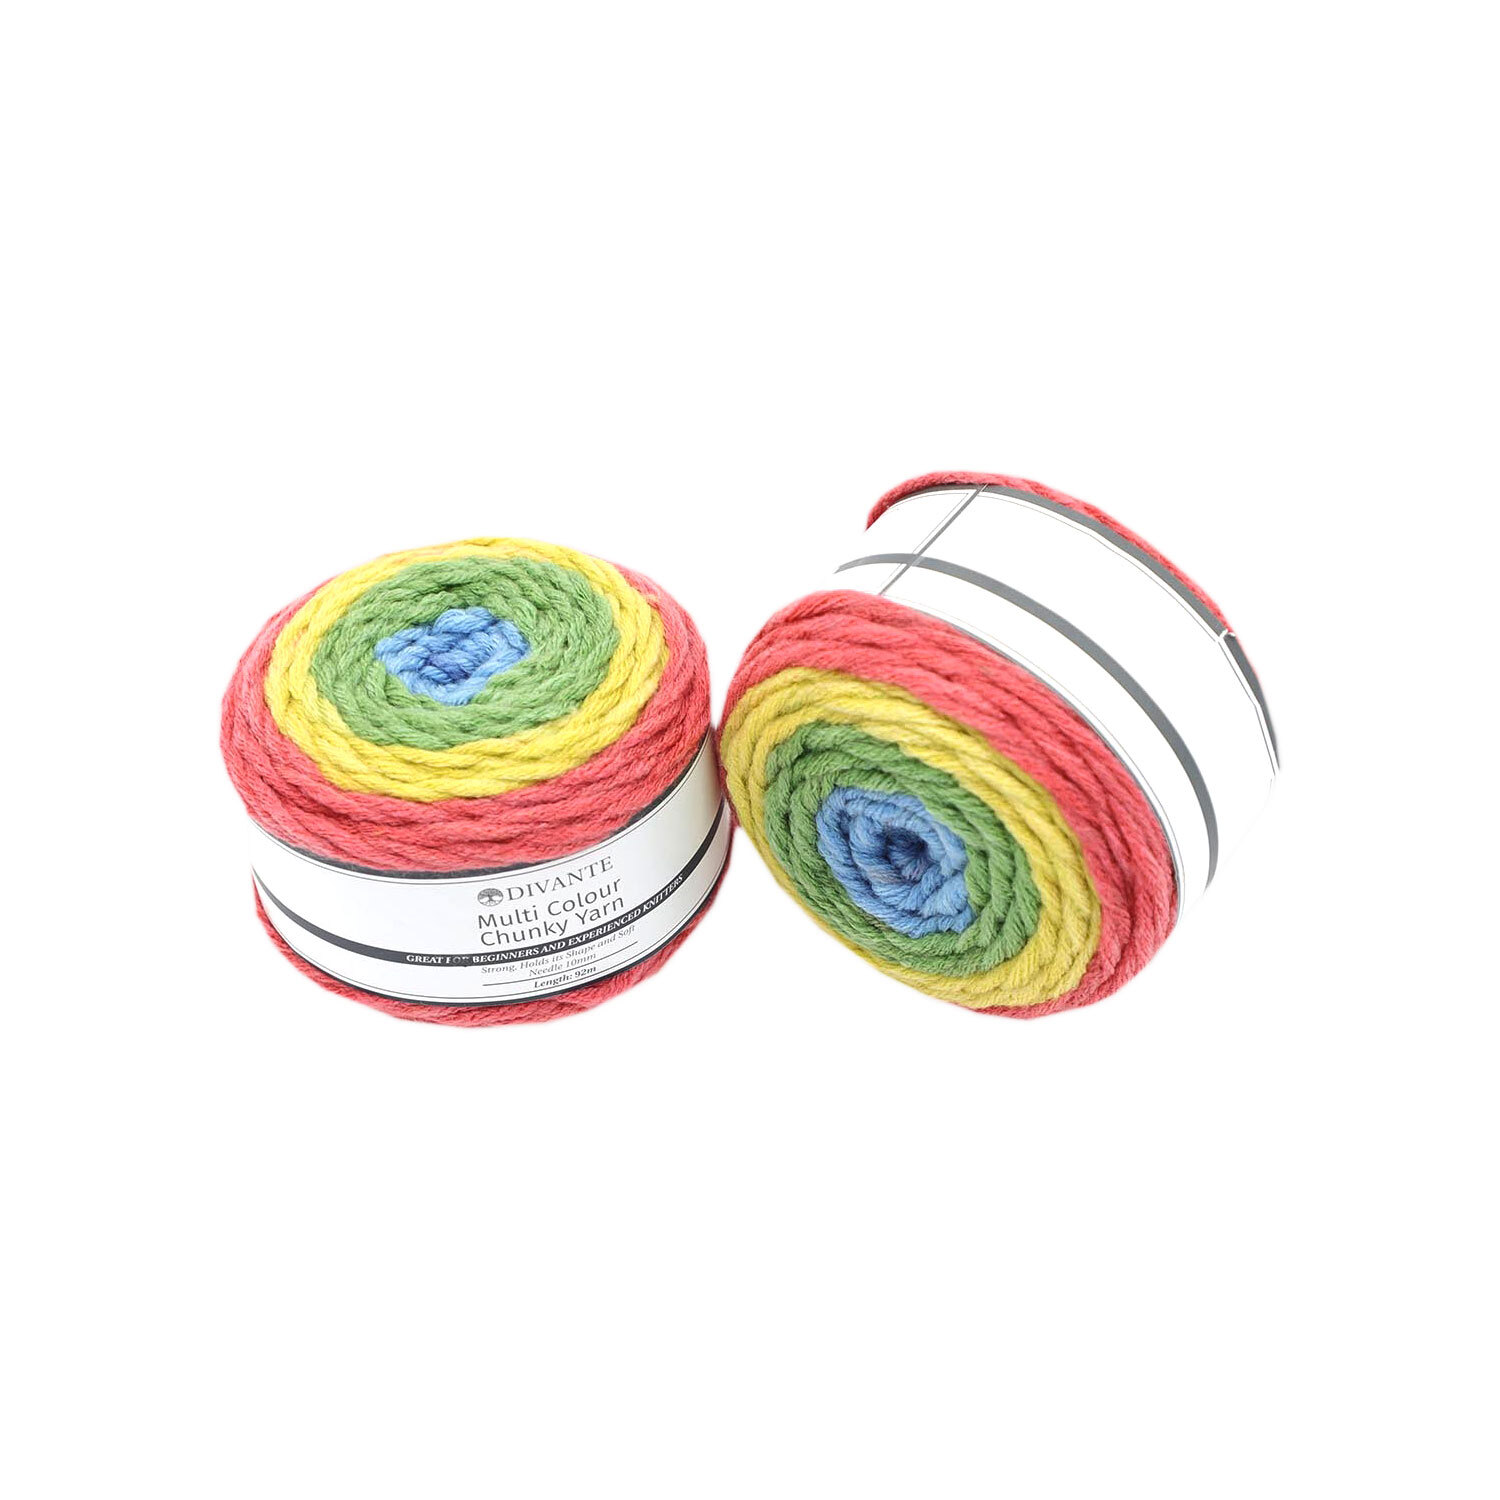 Divante Multi Colour Chunky Yarn 100g Image